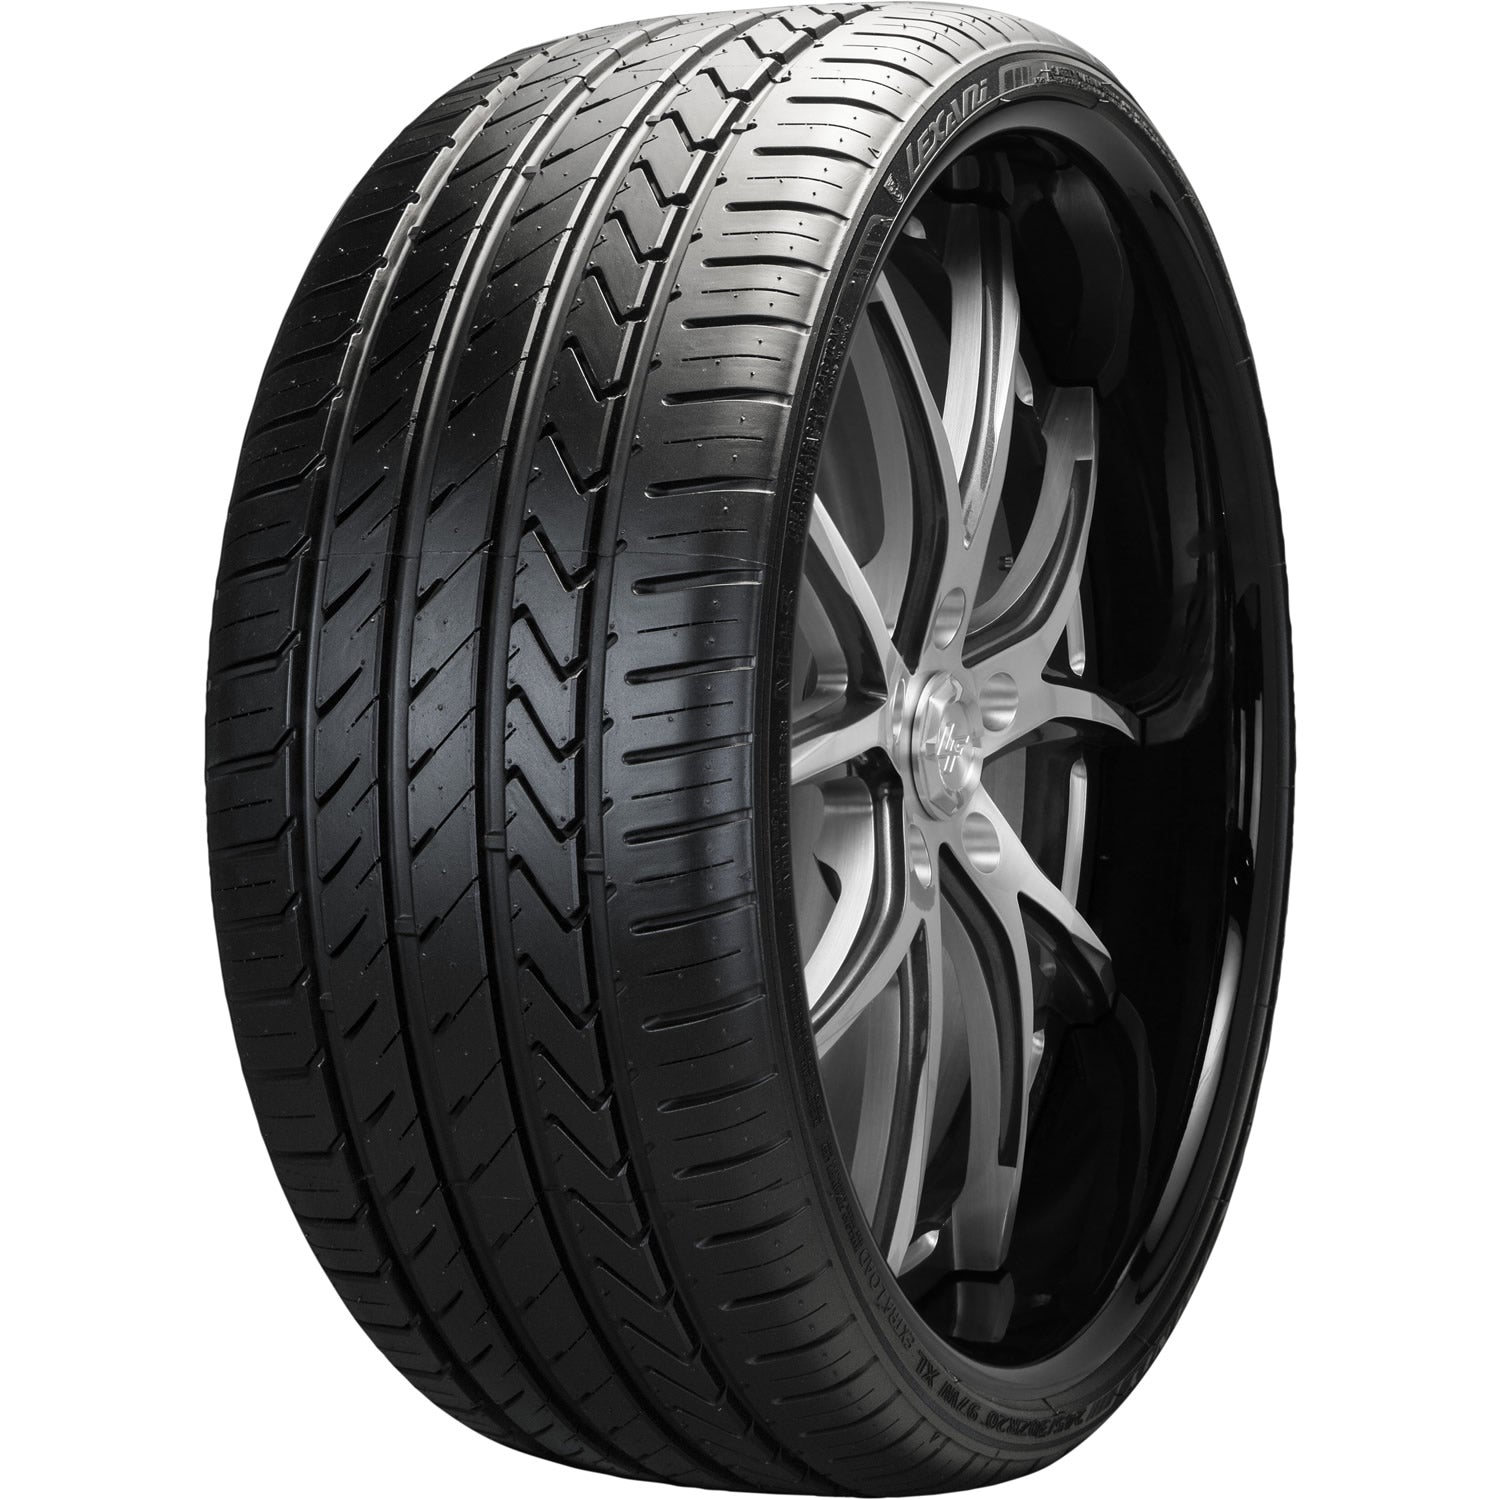 LEXANI LX-TWENTY 275/30ZR19 (25.6X10.9R 19) Tires